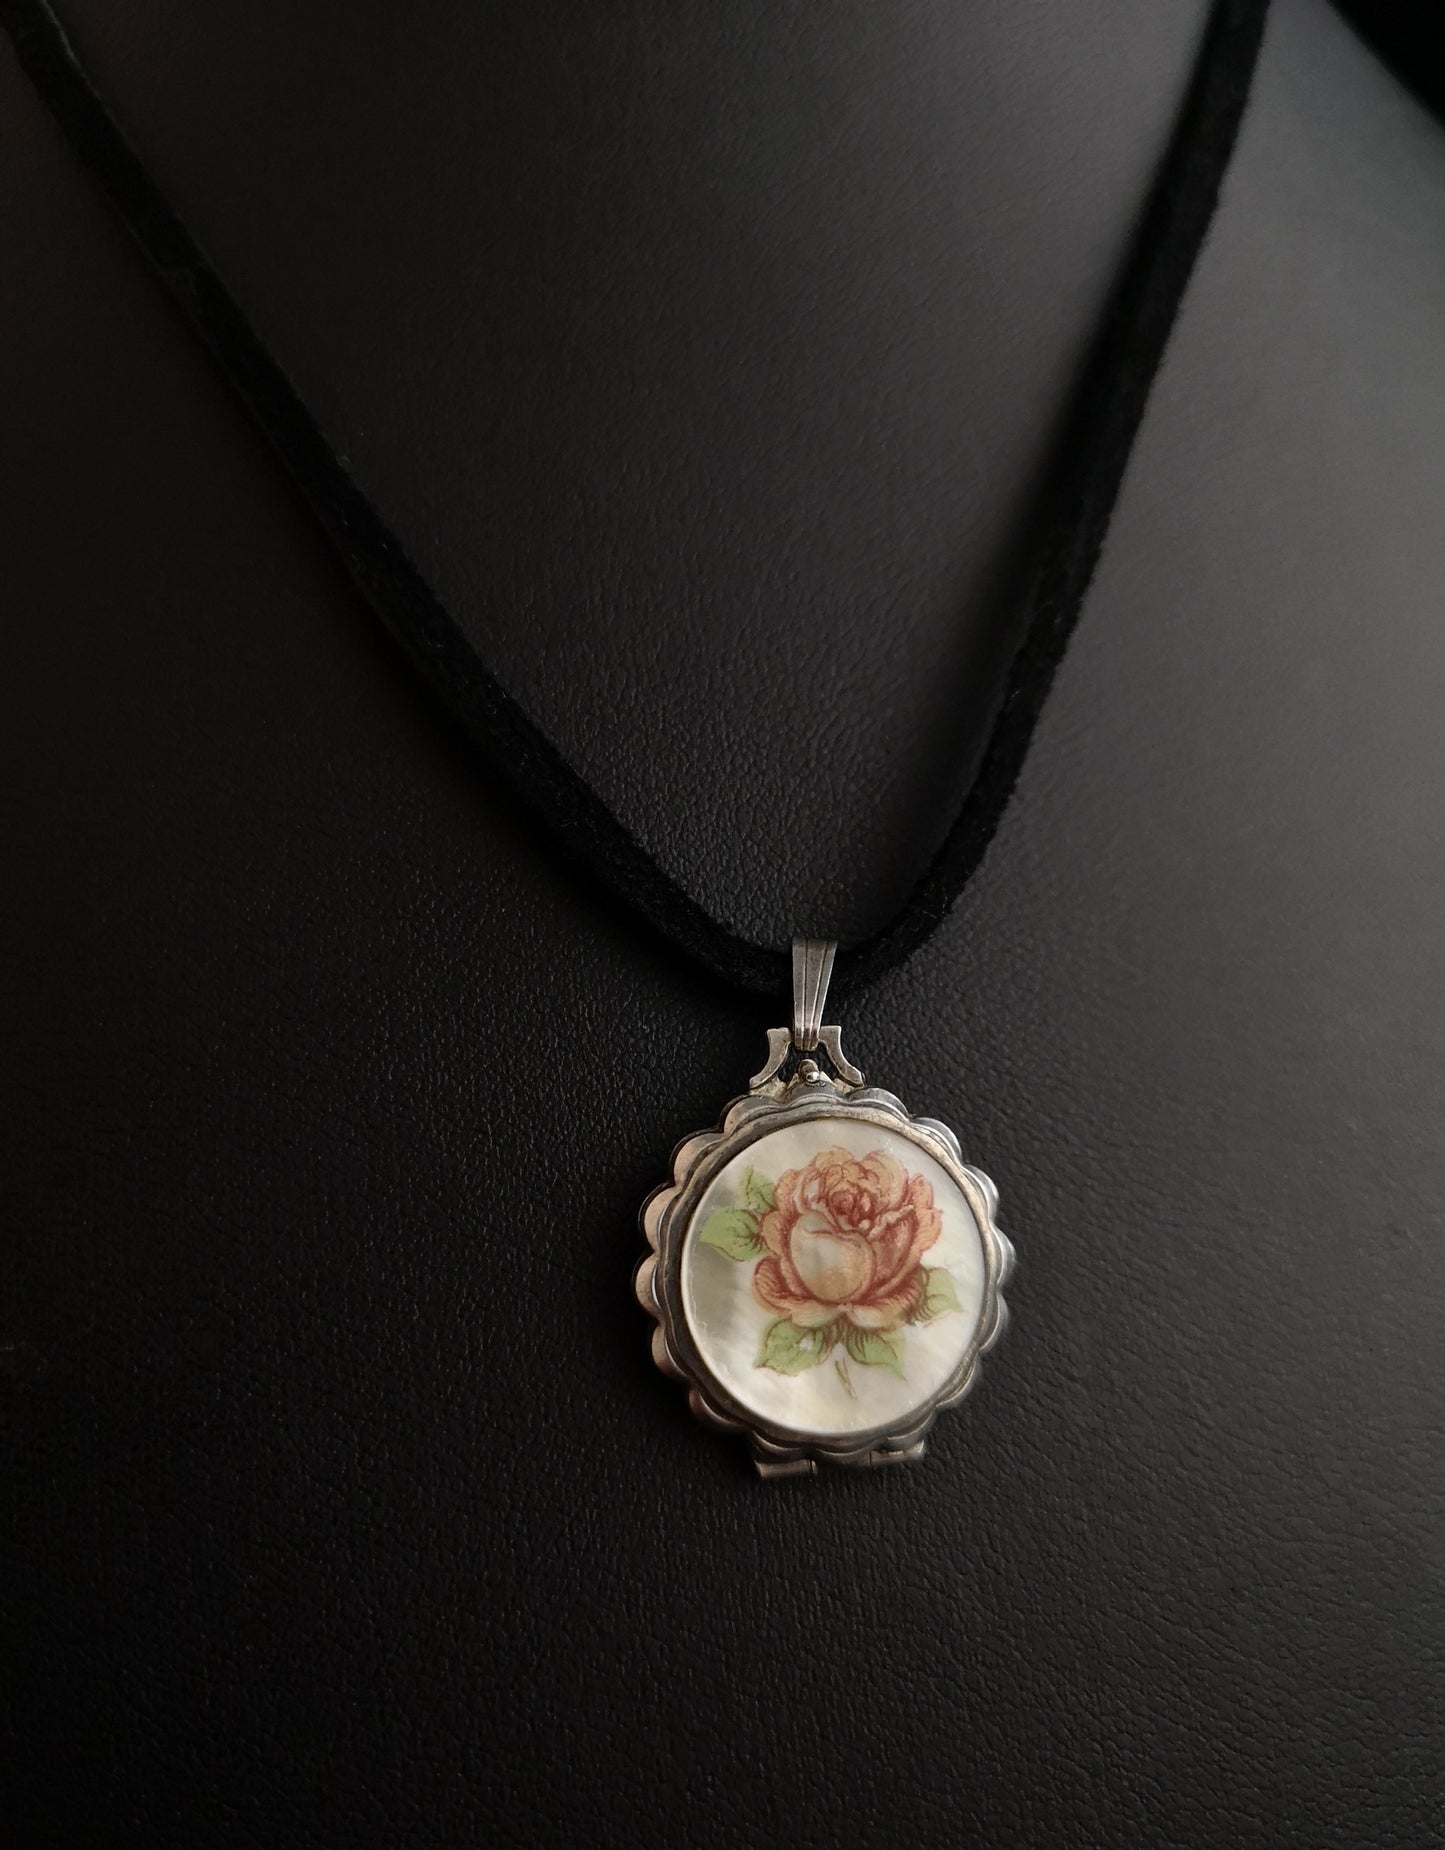 Vintage silver locket, Mother of pearl, Rose